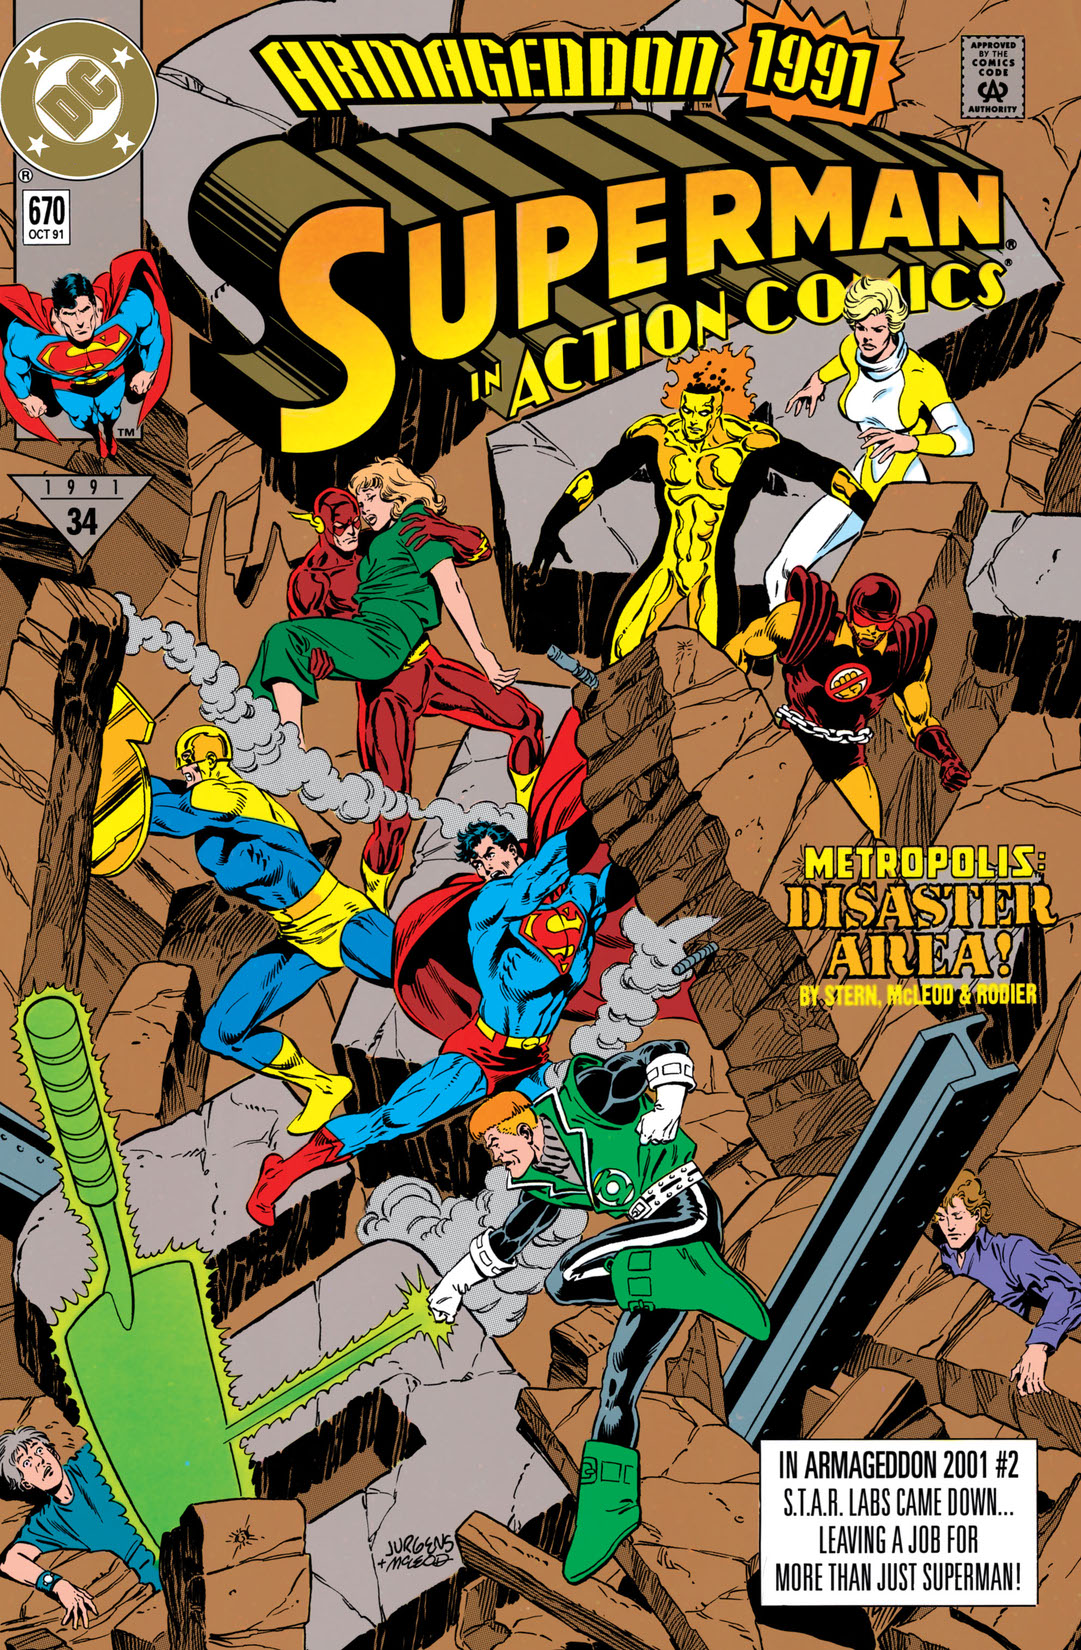 Action Comics (1938-) #670 preview images